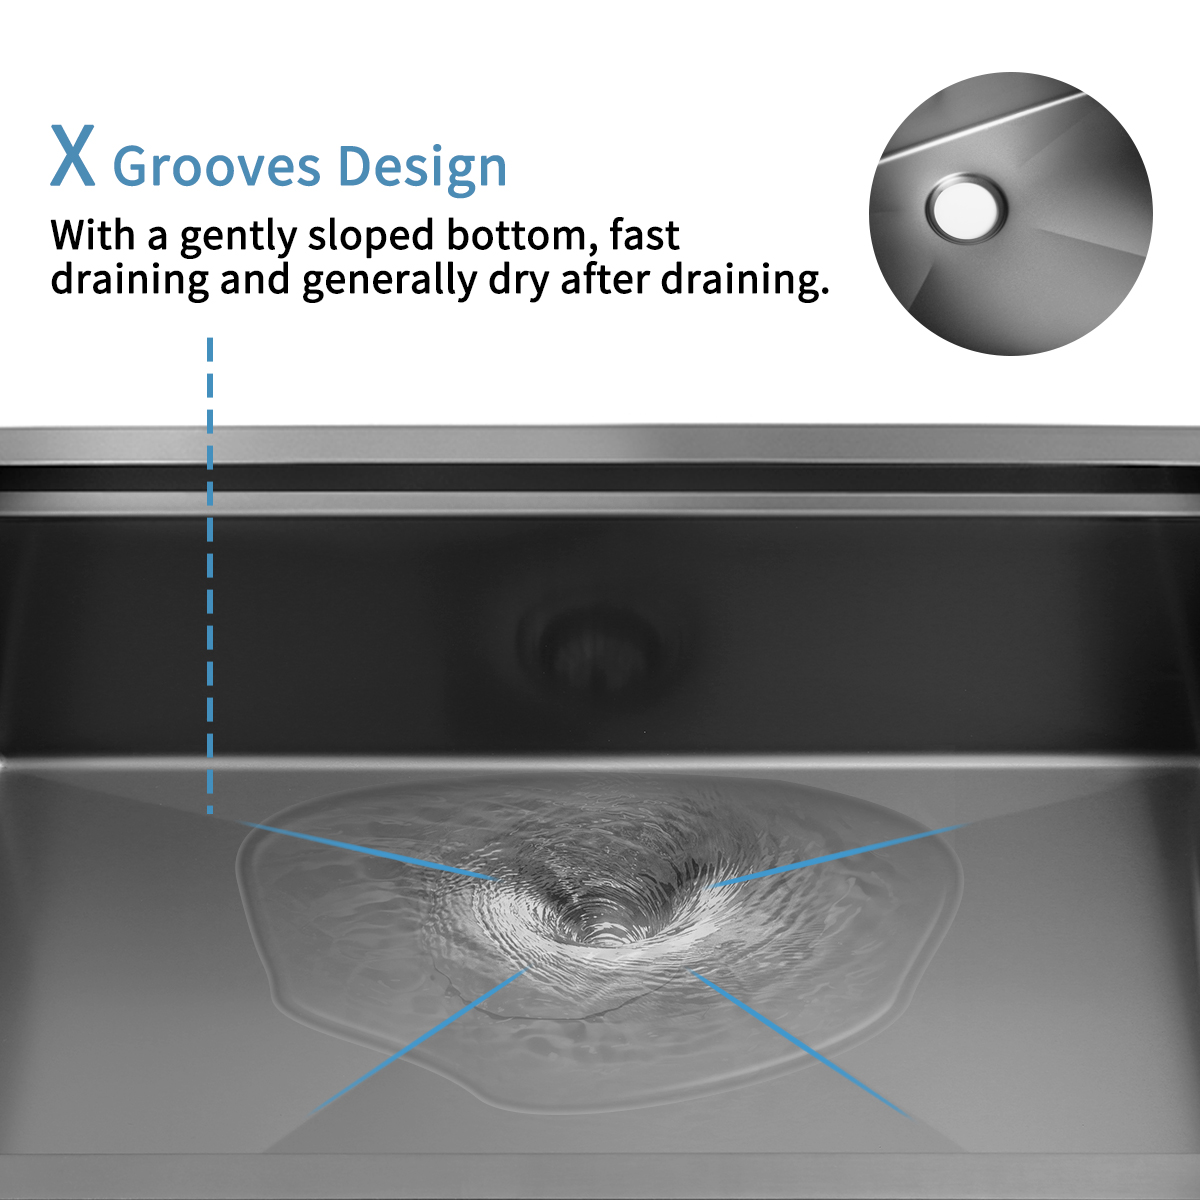 32" x 19" Stainless Steel Handmade Undermount Gunmetal Black Nano Kitchen Sink with Ledge